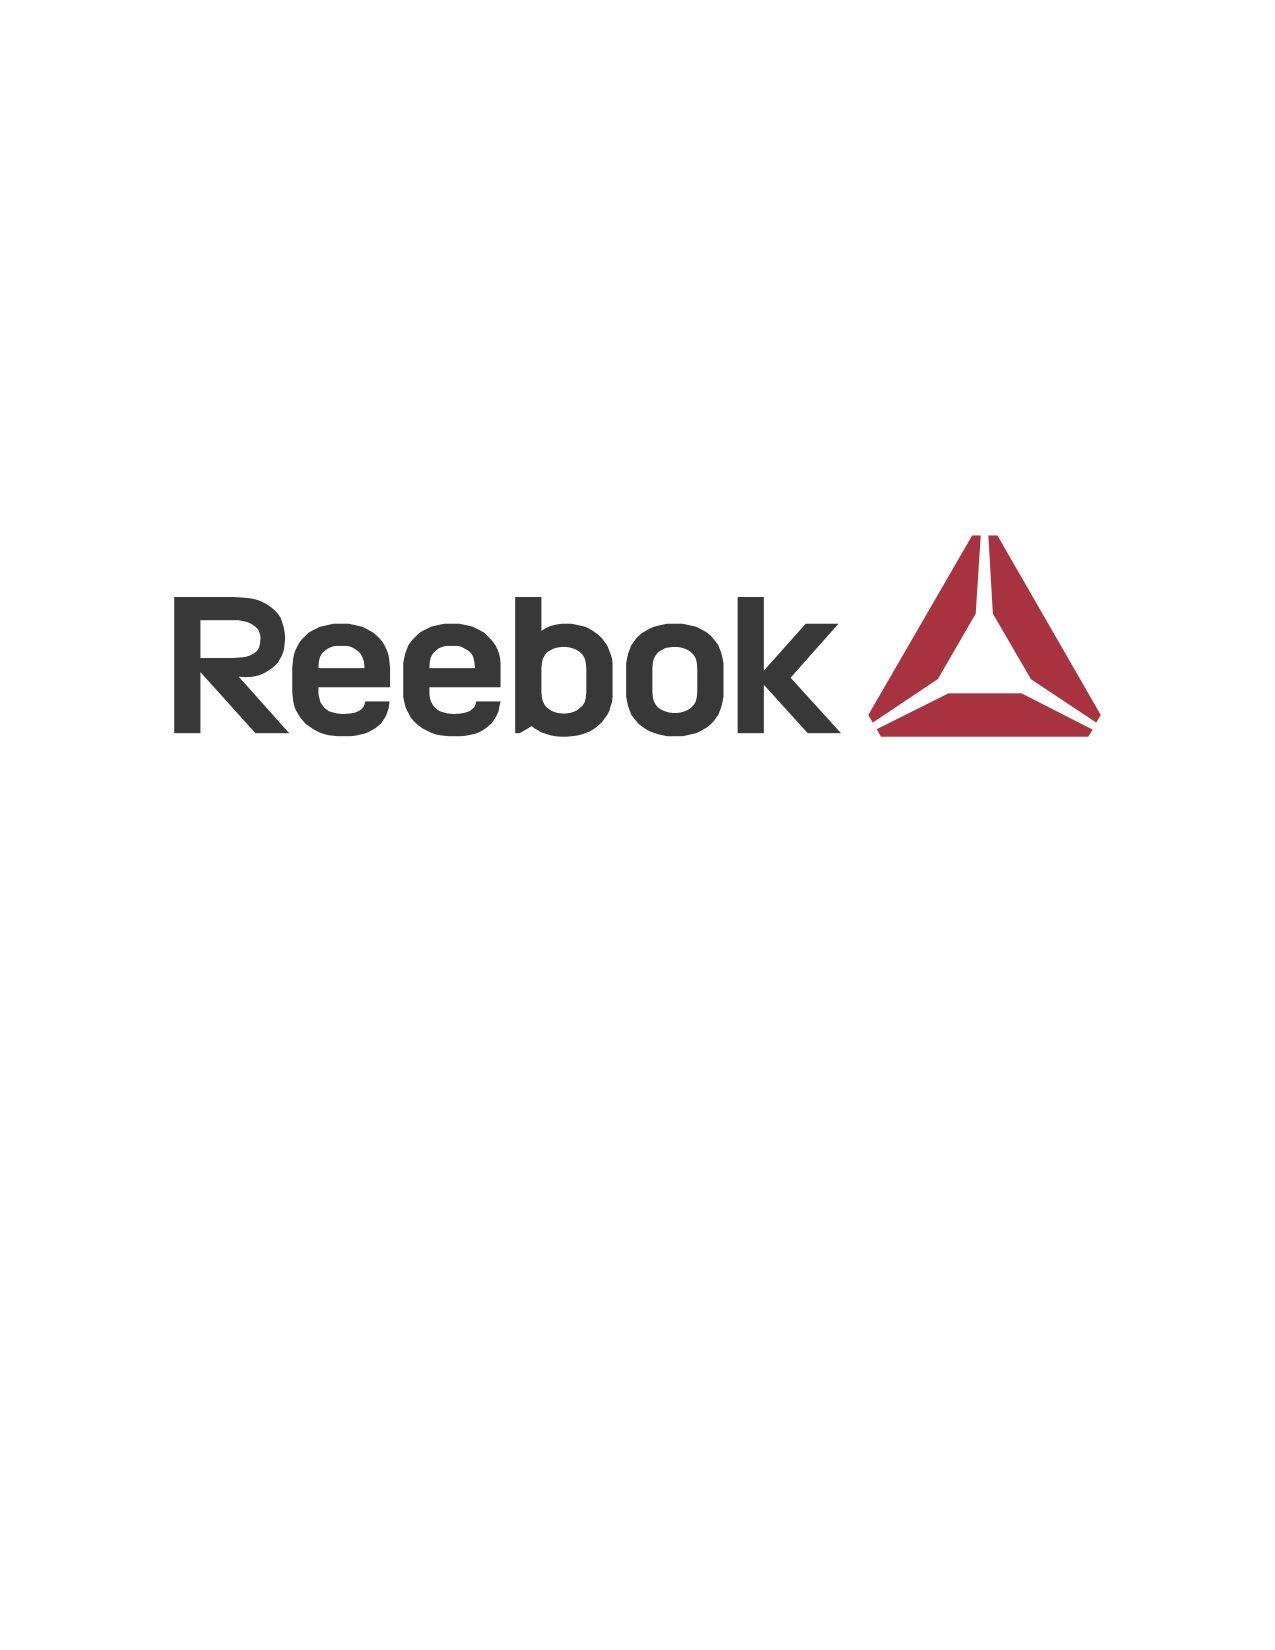 Reebok Wallpaper Free Reebok Background